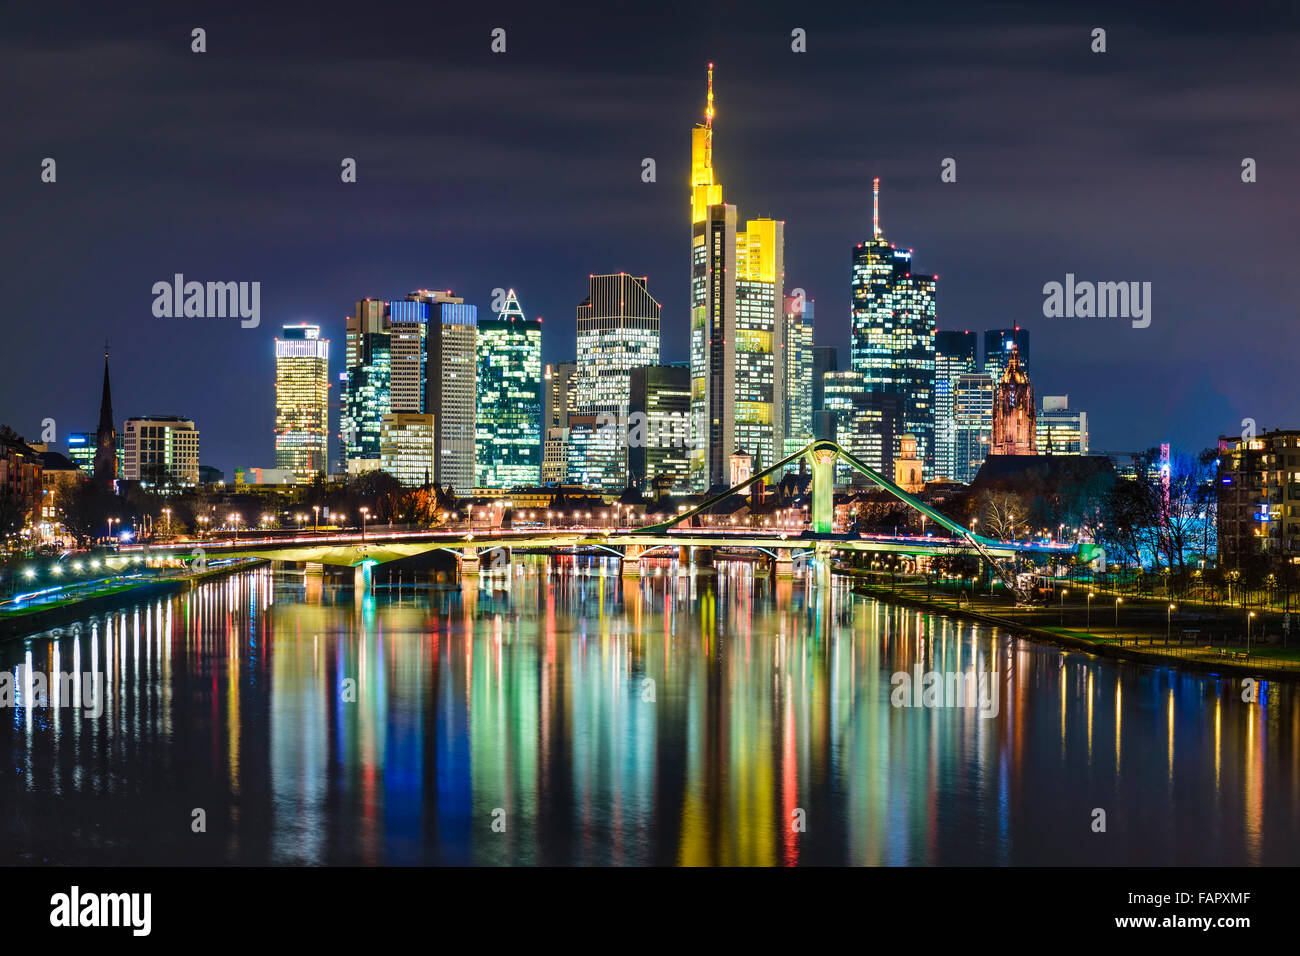 Skyline of Frankfurt, Germany at night Stock Photo